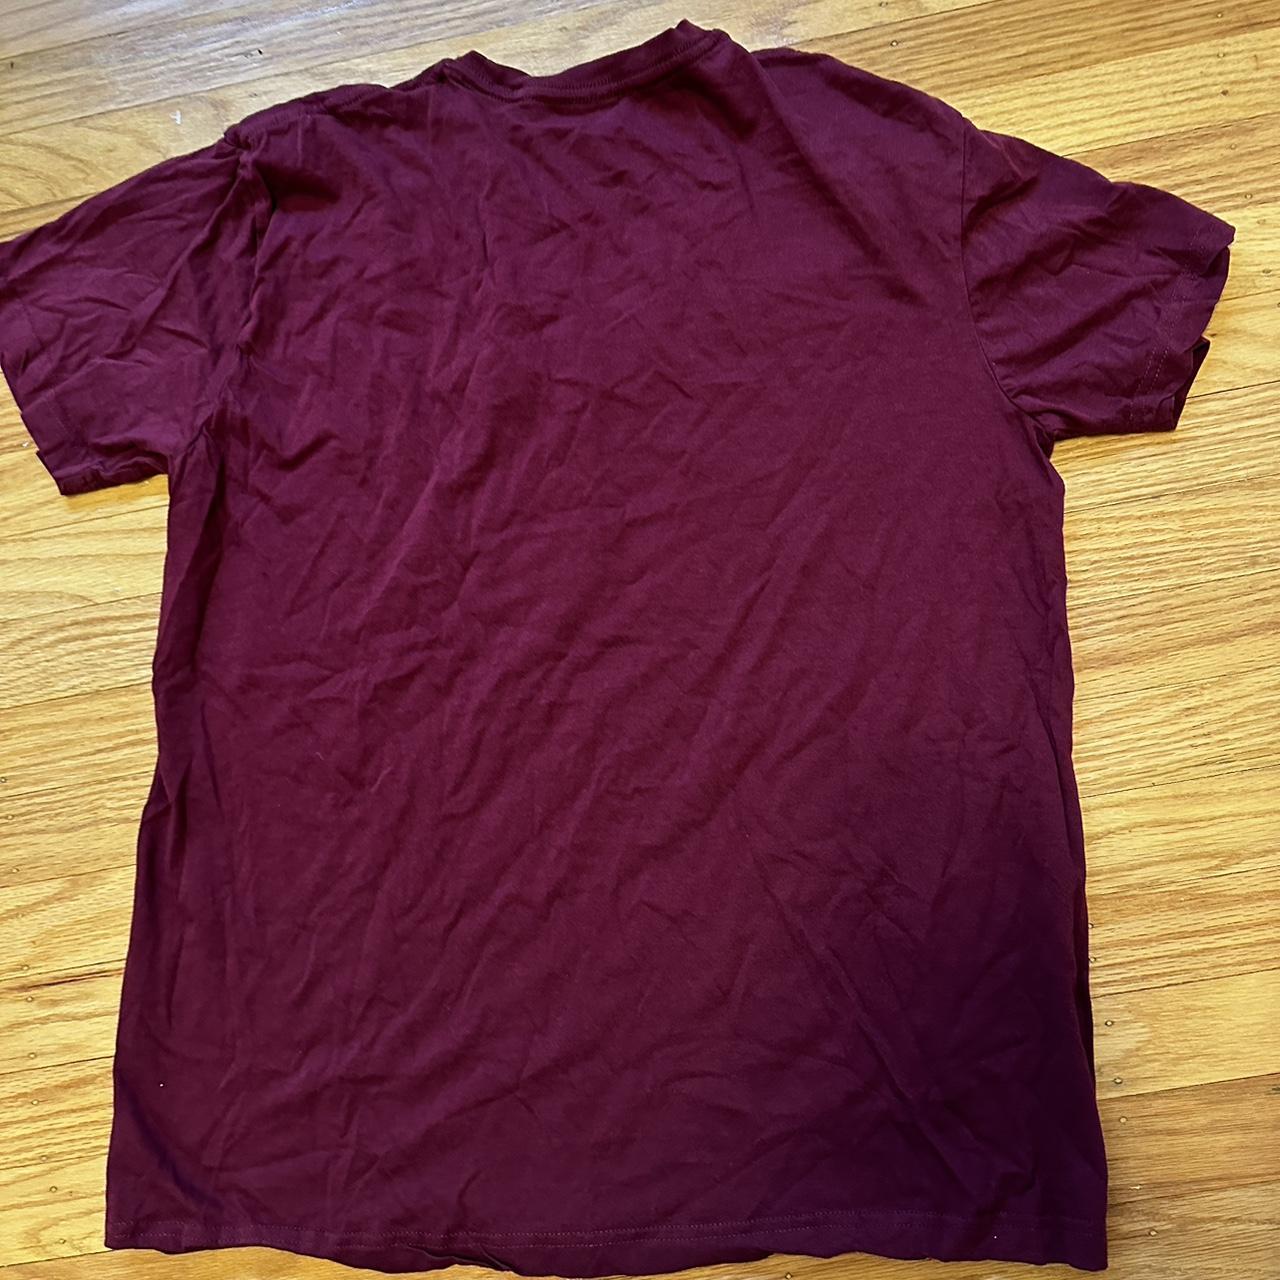 Barney Cools Men's Burgundy T-shirt (4)